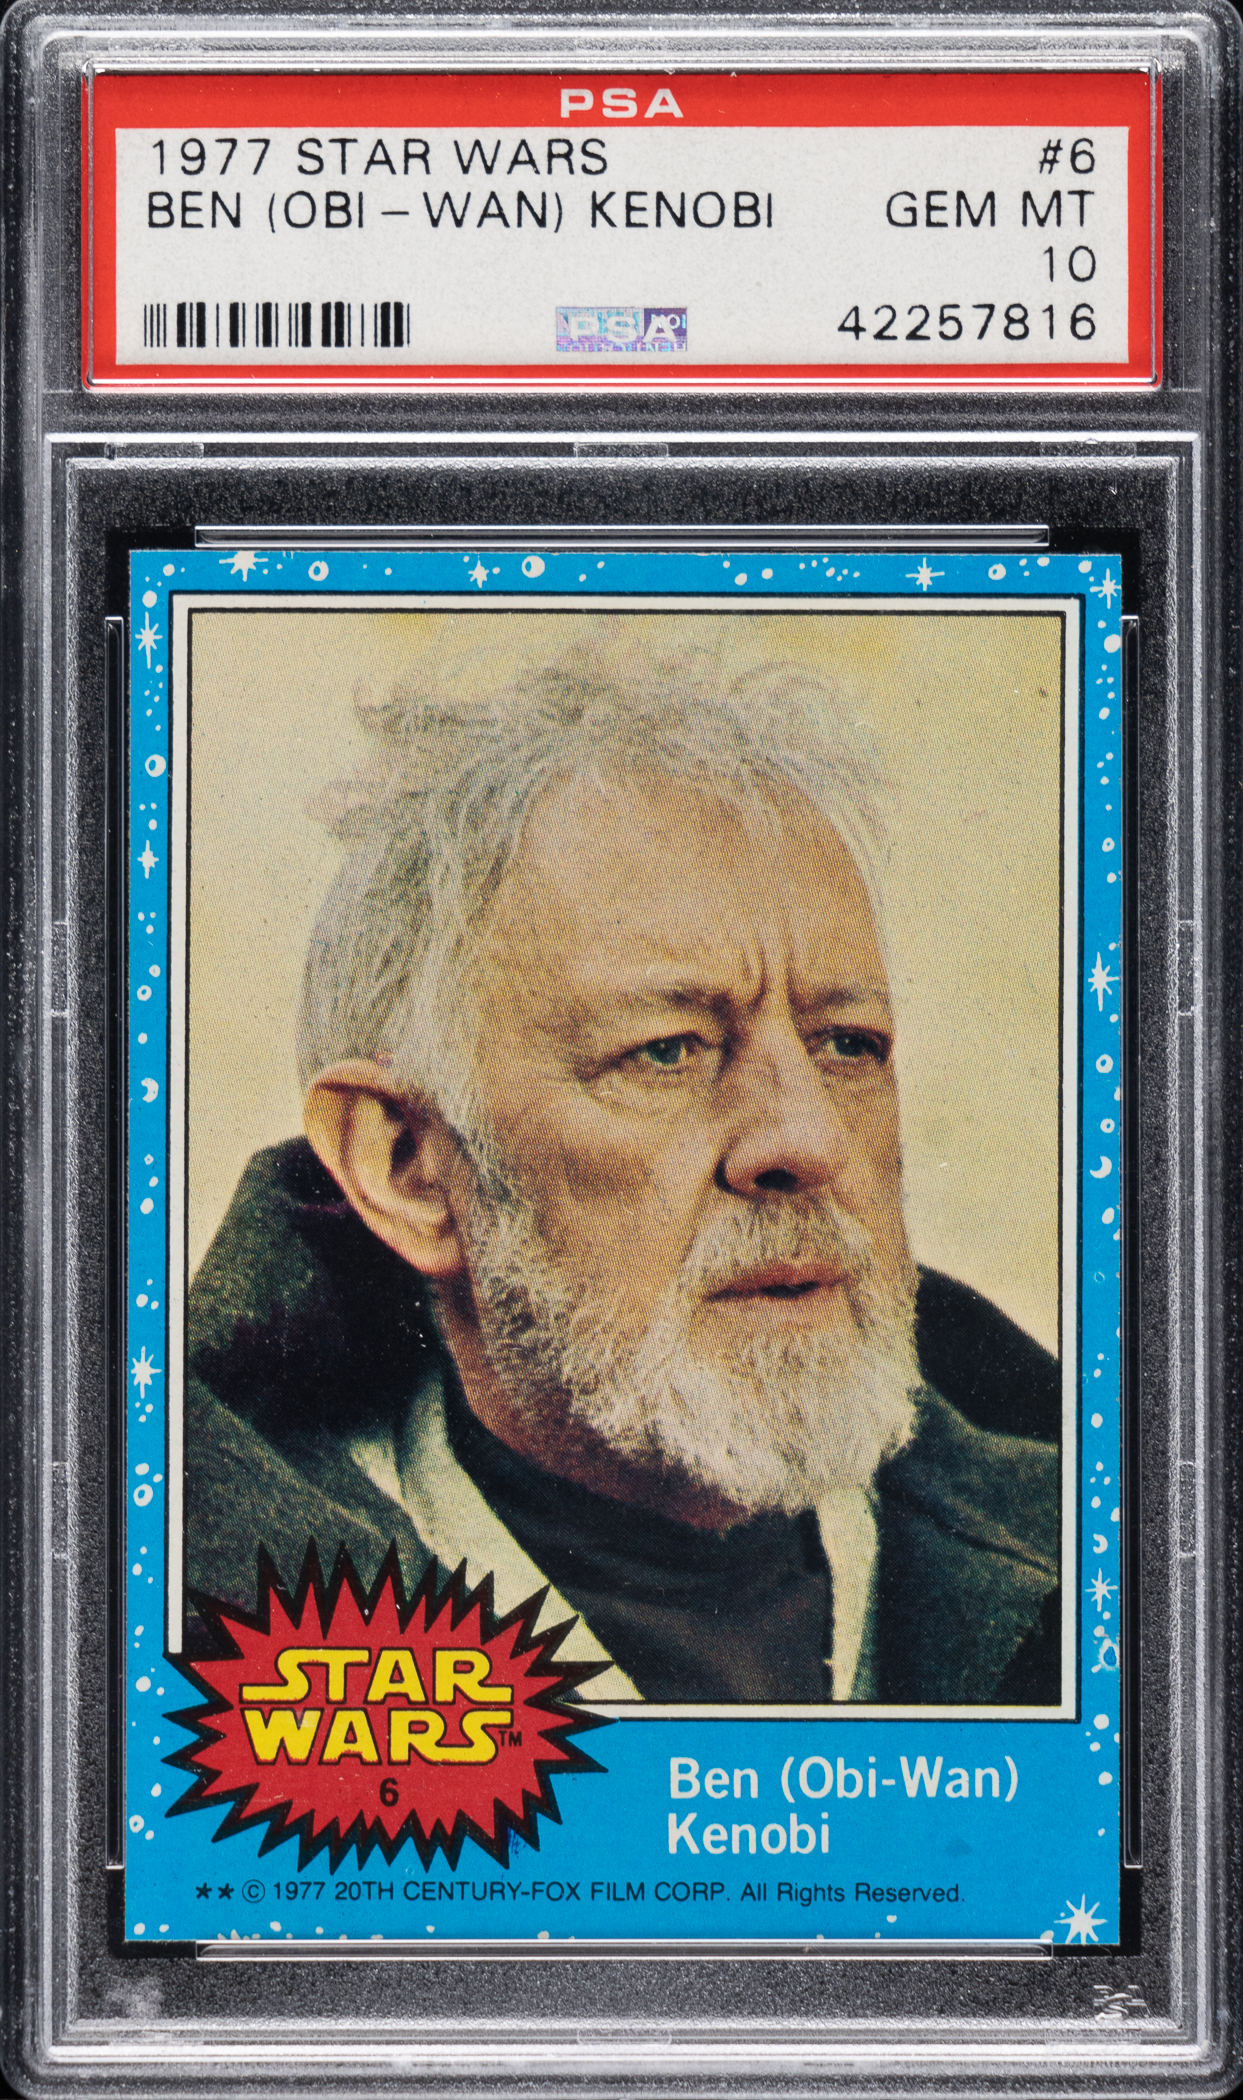 The Ben (Obi-Wan) Kenobi #6 card is among several in Mruczek's set that have a perfect GEM MINT 10 grade from PSA